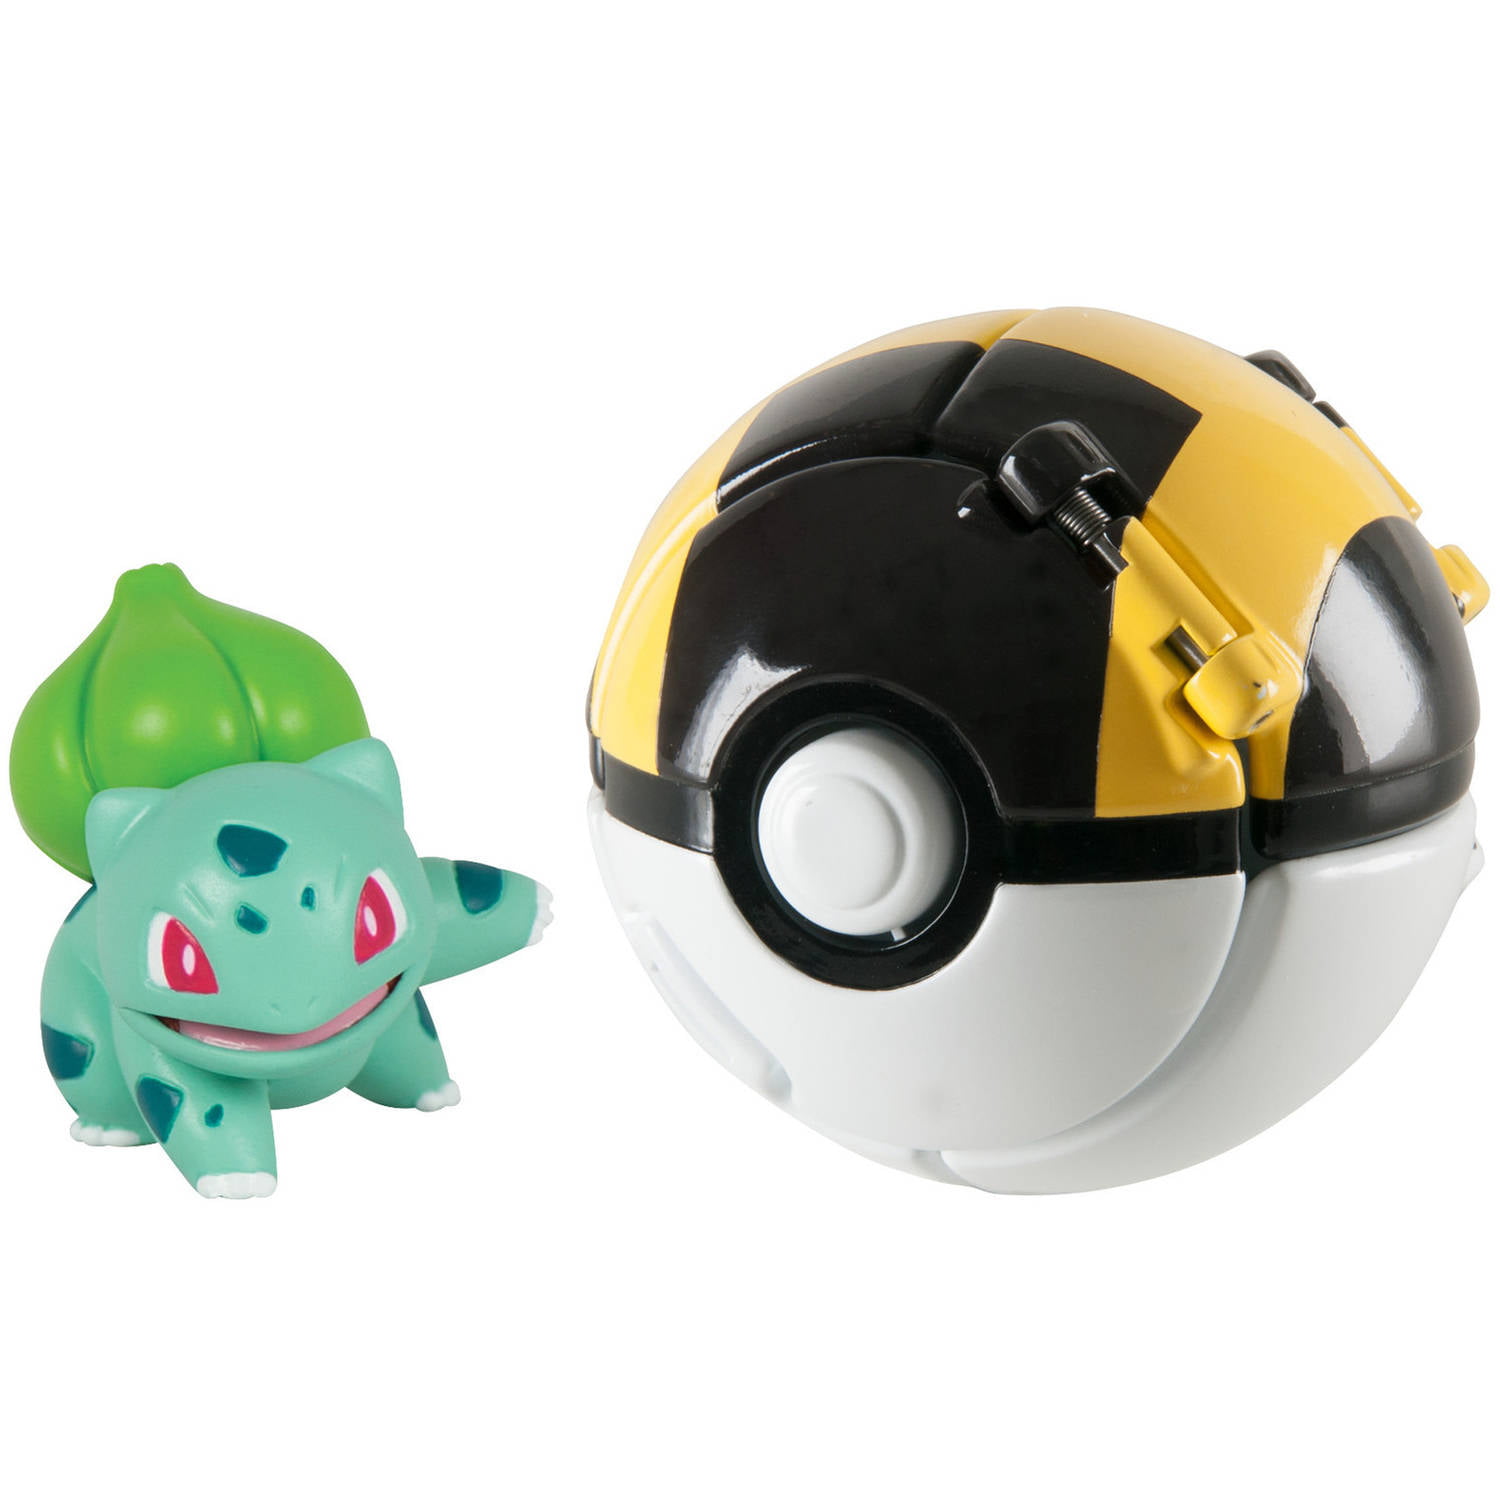 DUDEL Pokémon Throw N Pop Poké Ball,Figurine Pokemon and Pokemon Ball Action Figure Toy